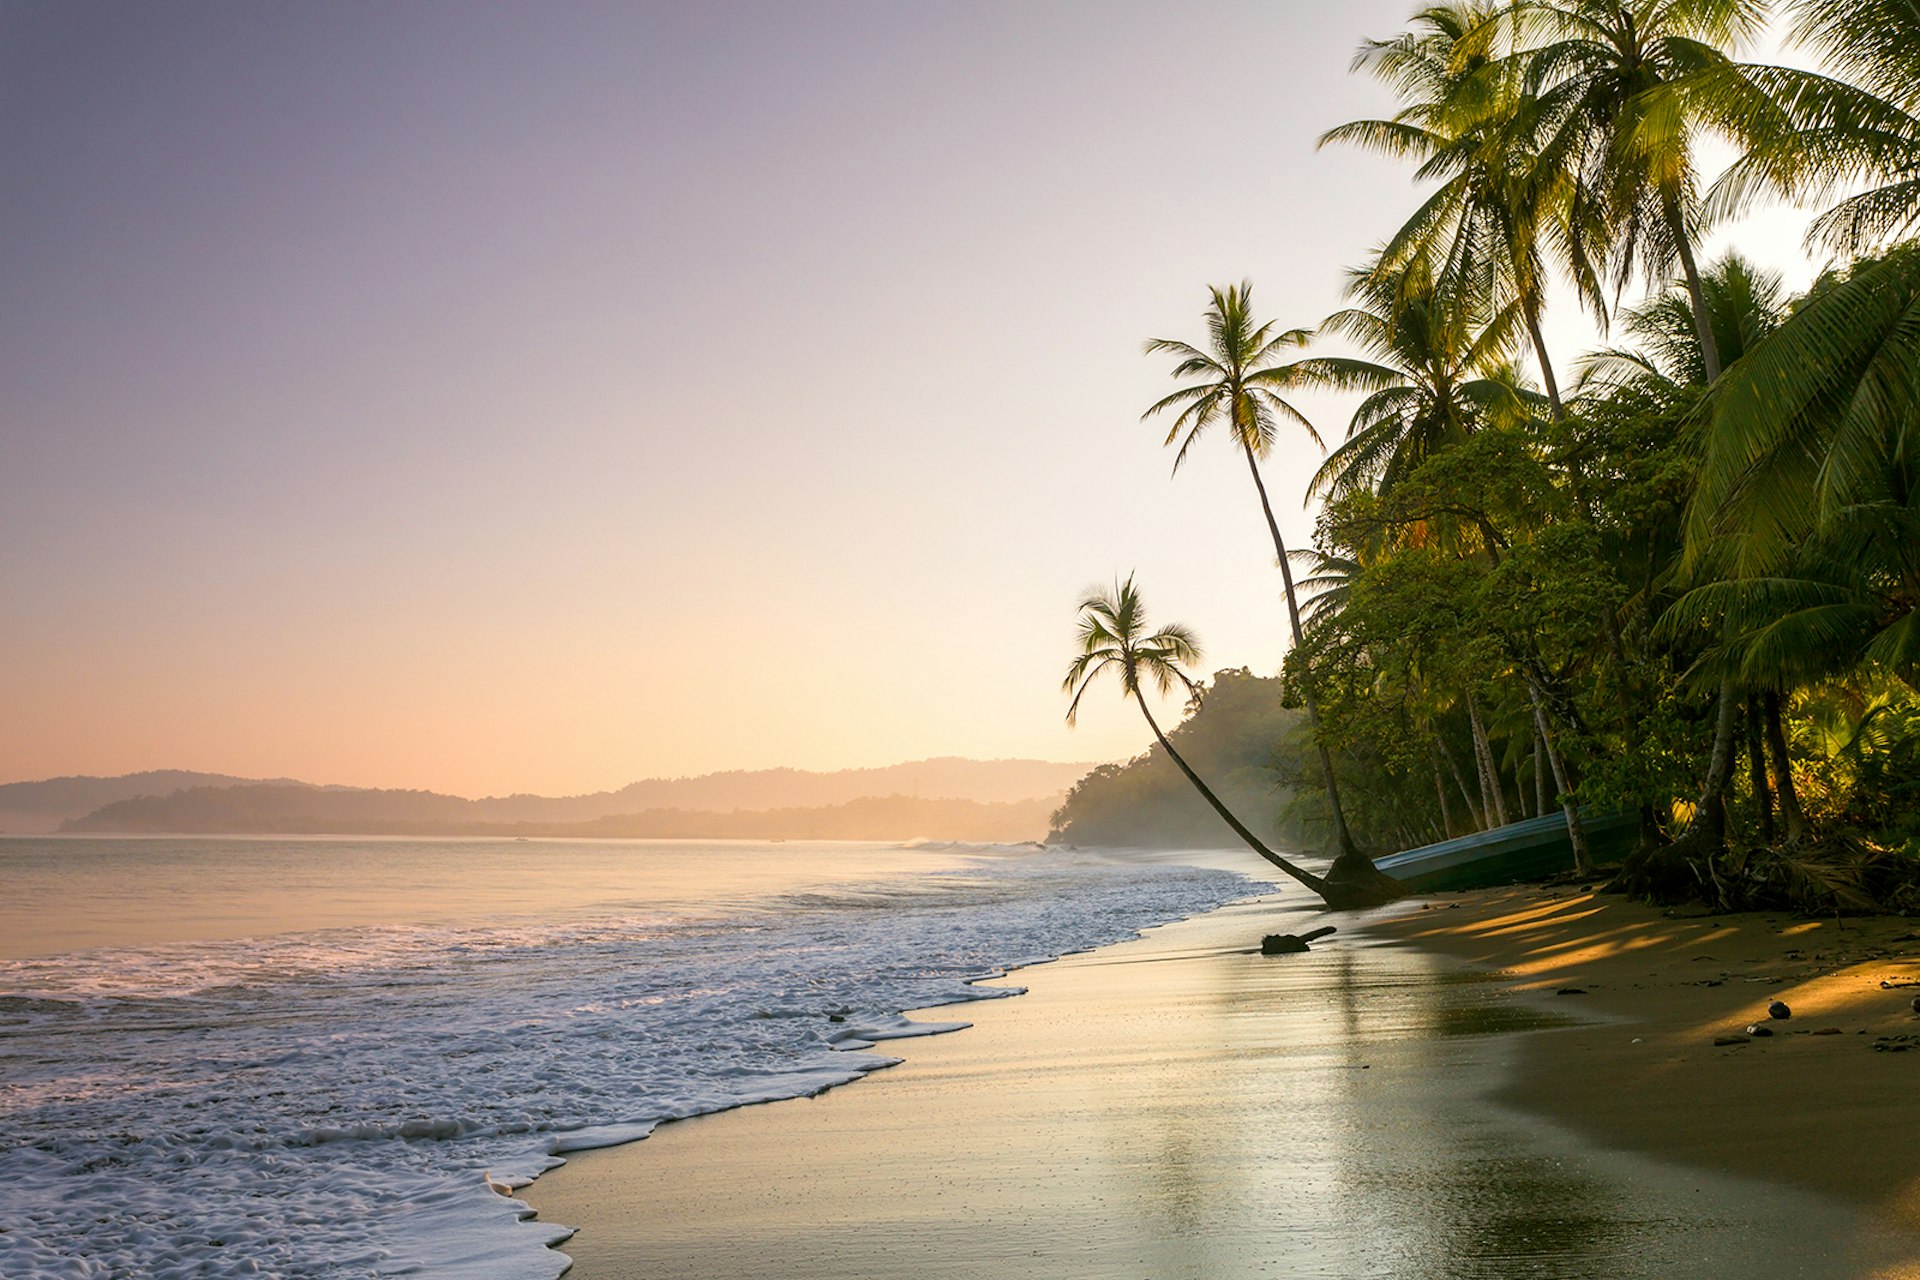 Sunset on a palm-fringed beach